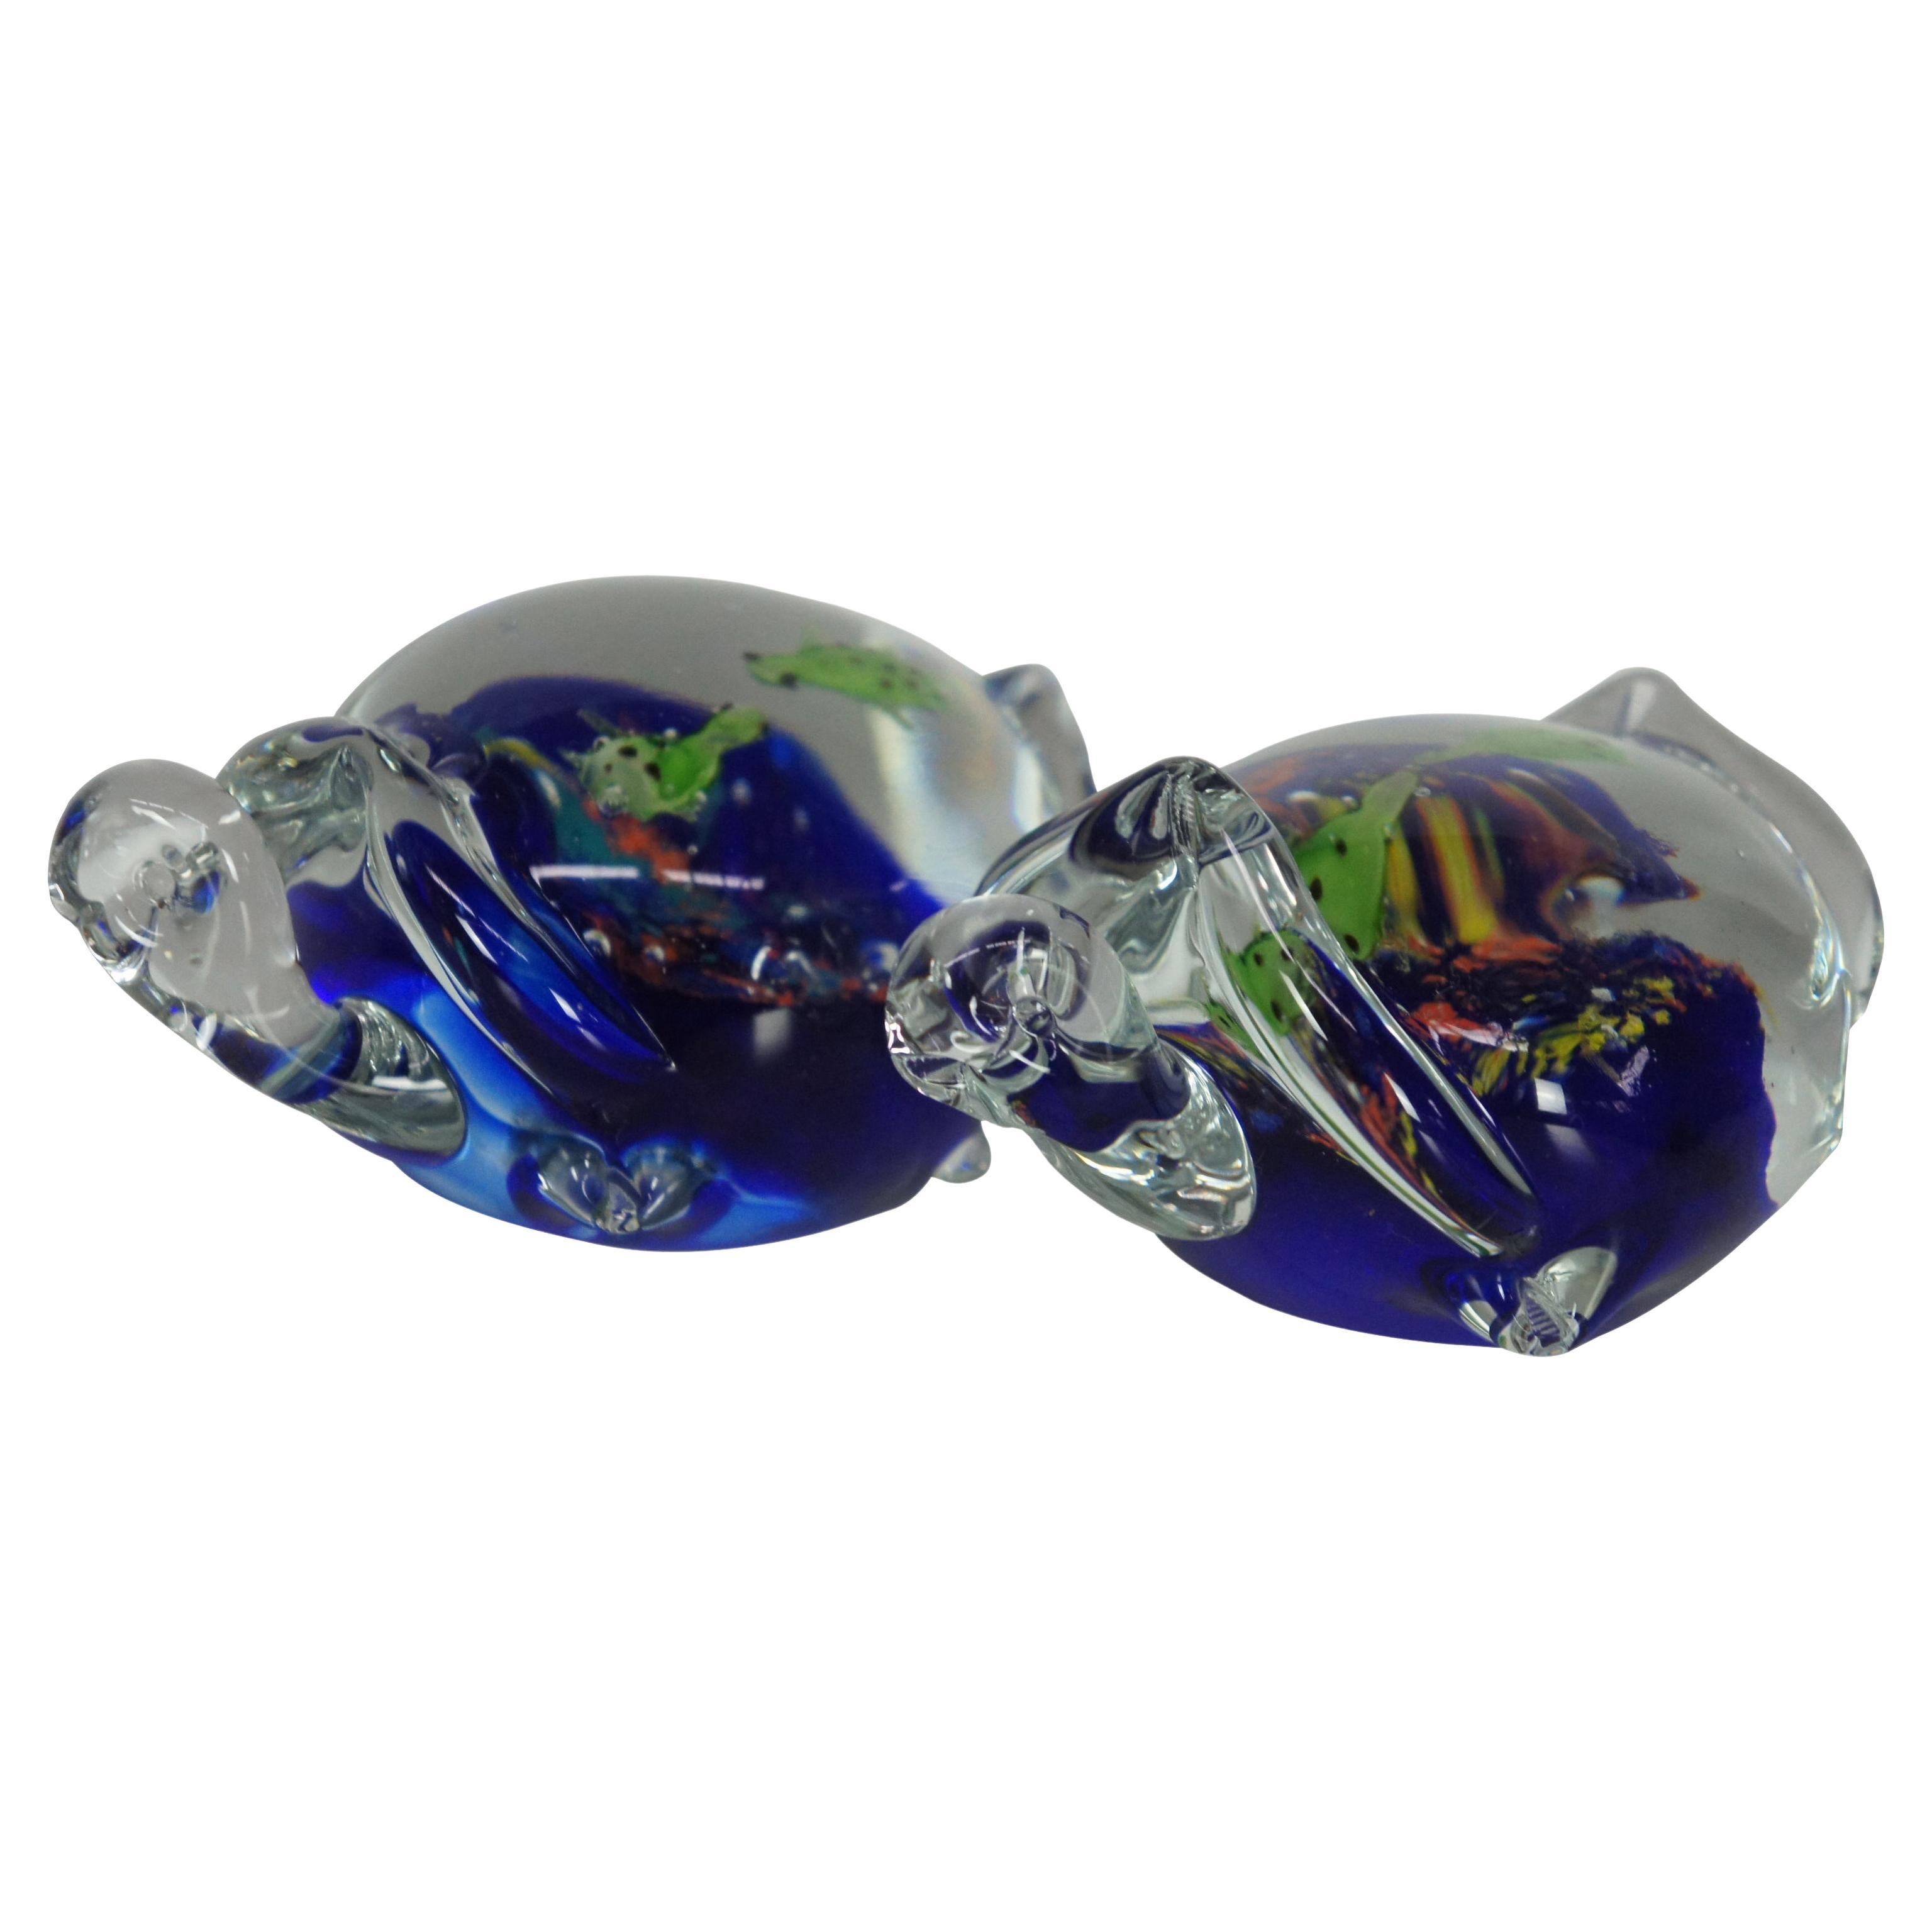 2 Murano Italian Art Glass Sea Turtle Aquarium Figurines Paperweights Pair For Sale